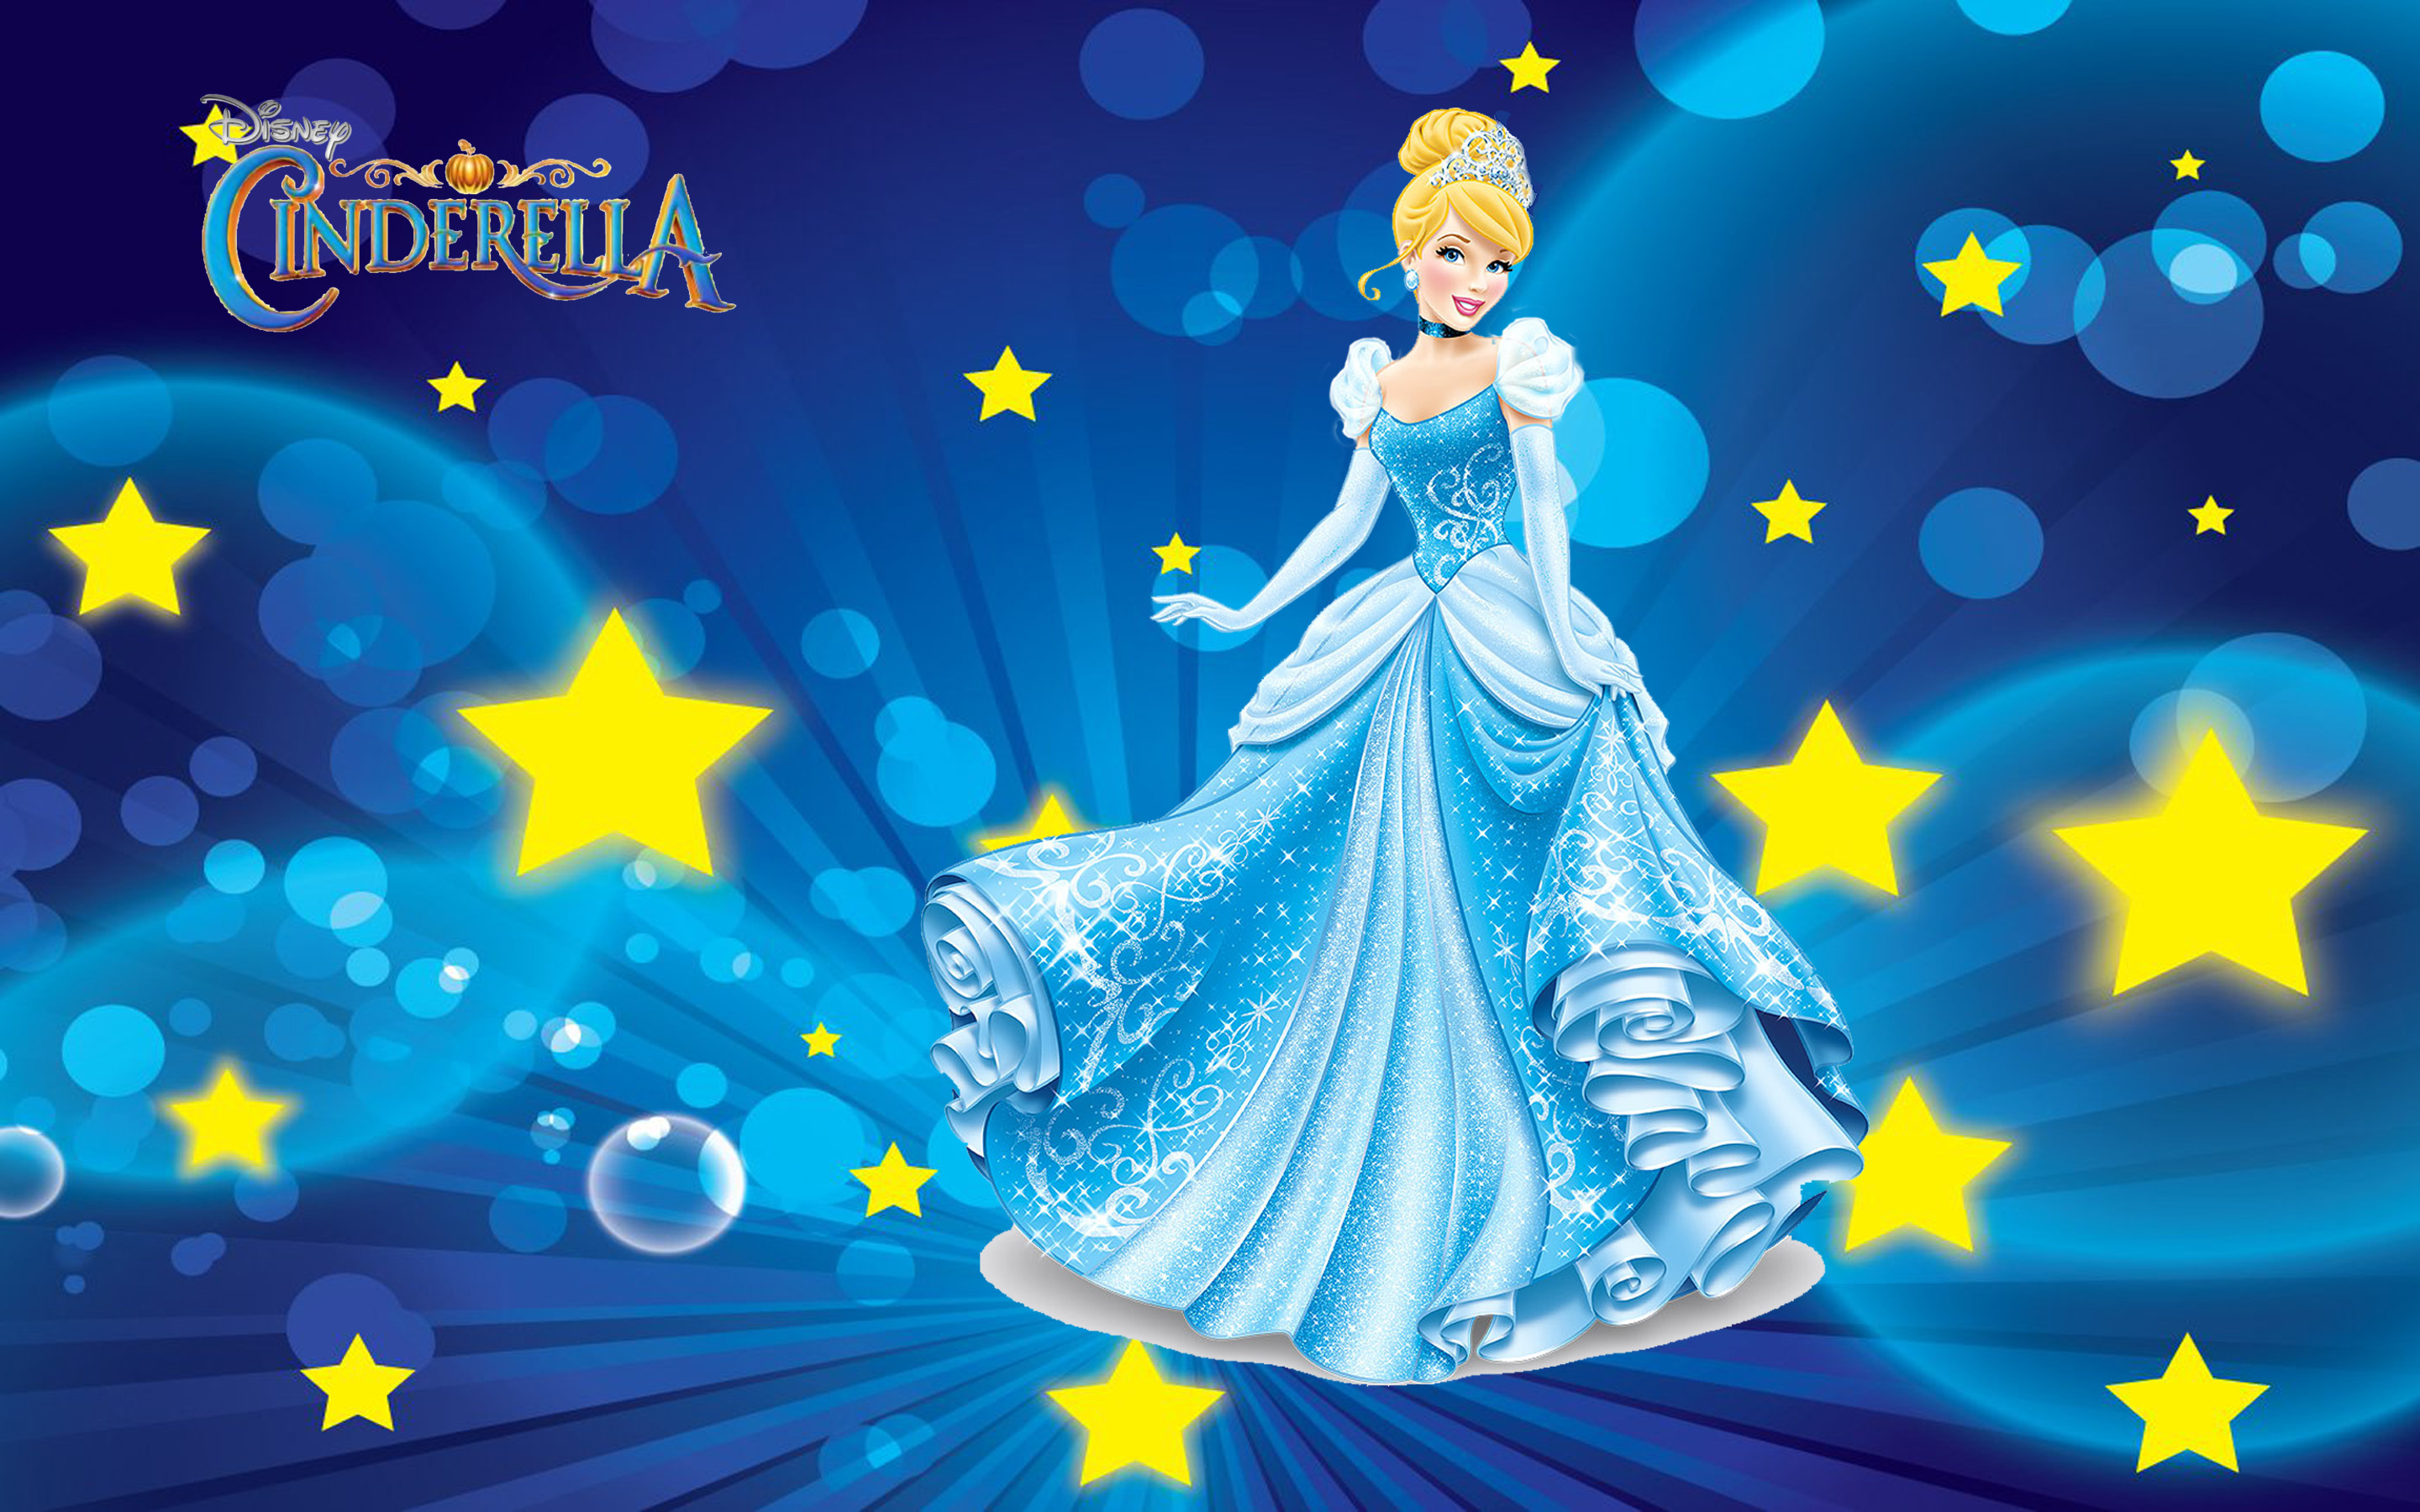 Disney Princess Cinderella Cartoon Desktop Hd Wallpaper For Pc Tablet And  Mobile Download 2880x1800 : 